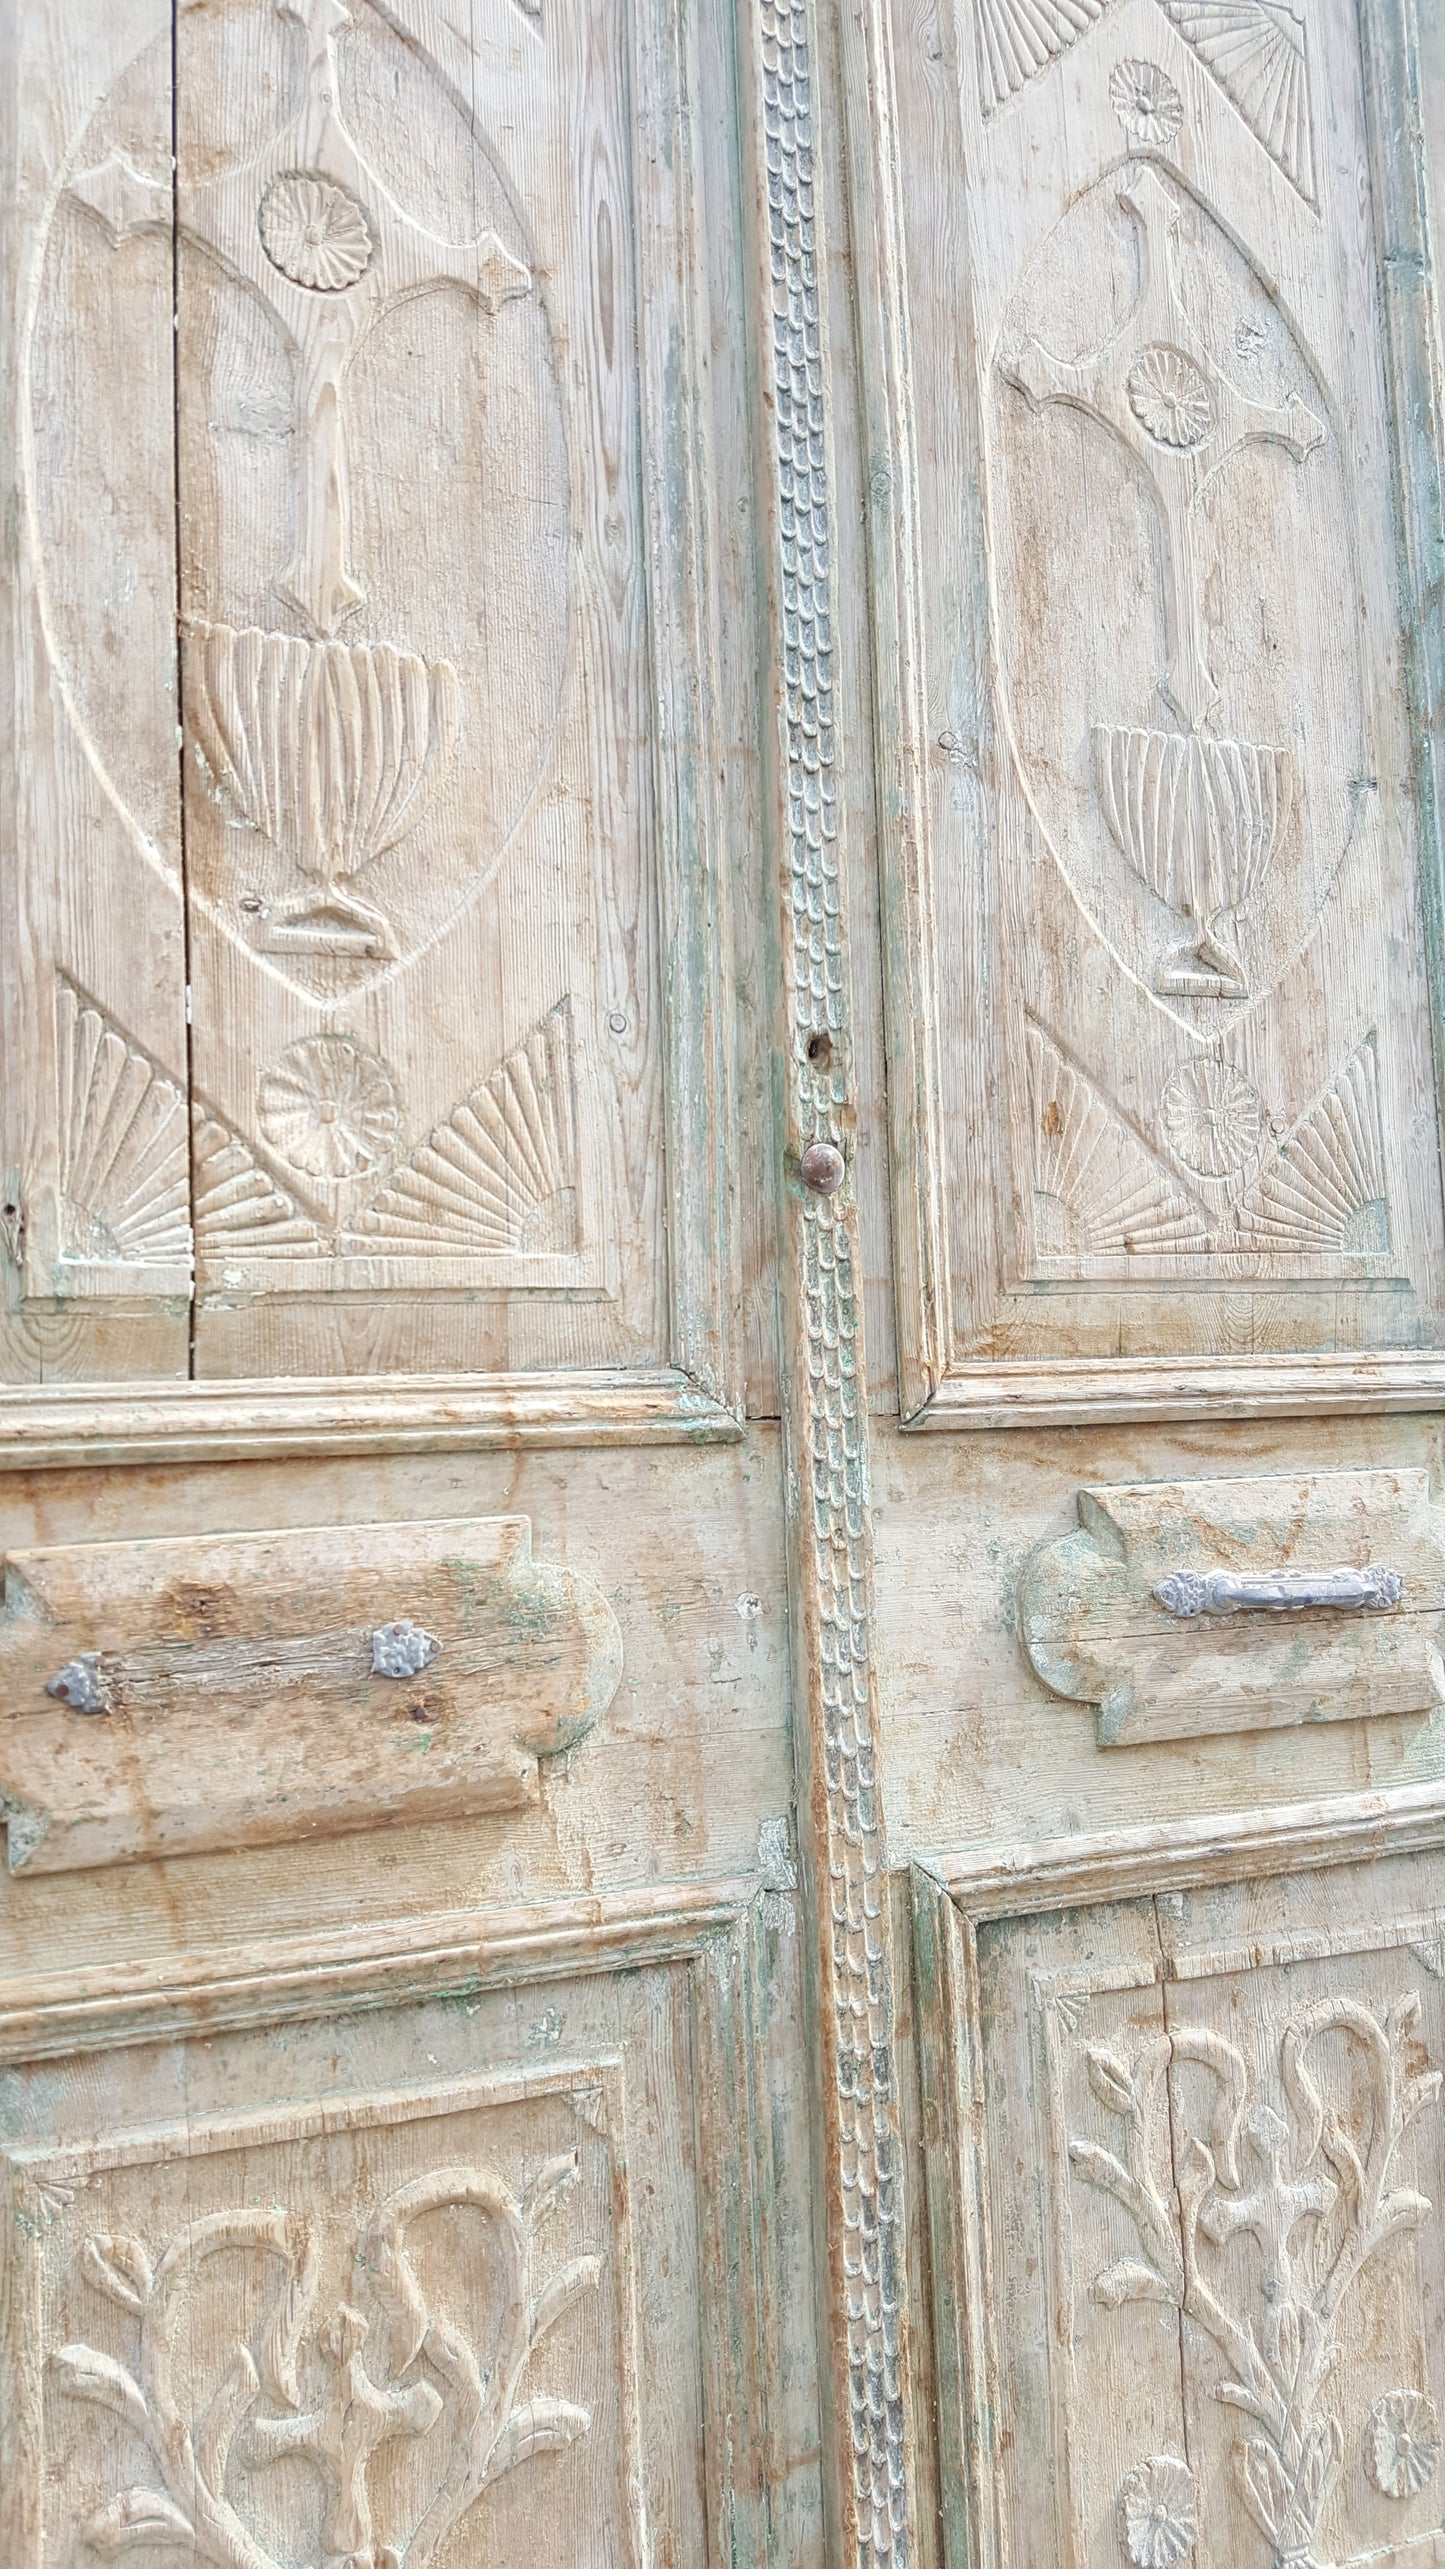 Single 4 Wood Panel Ornate Carved Antique Door